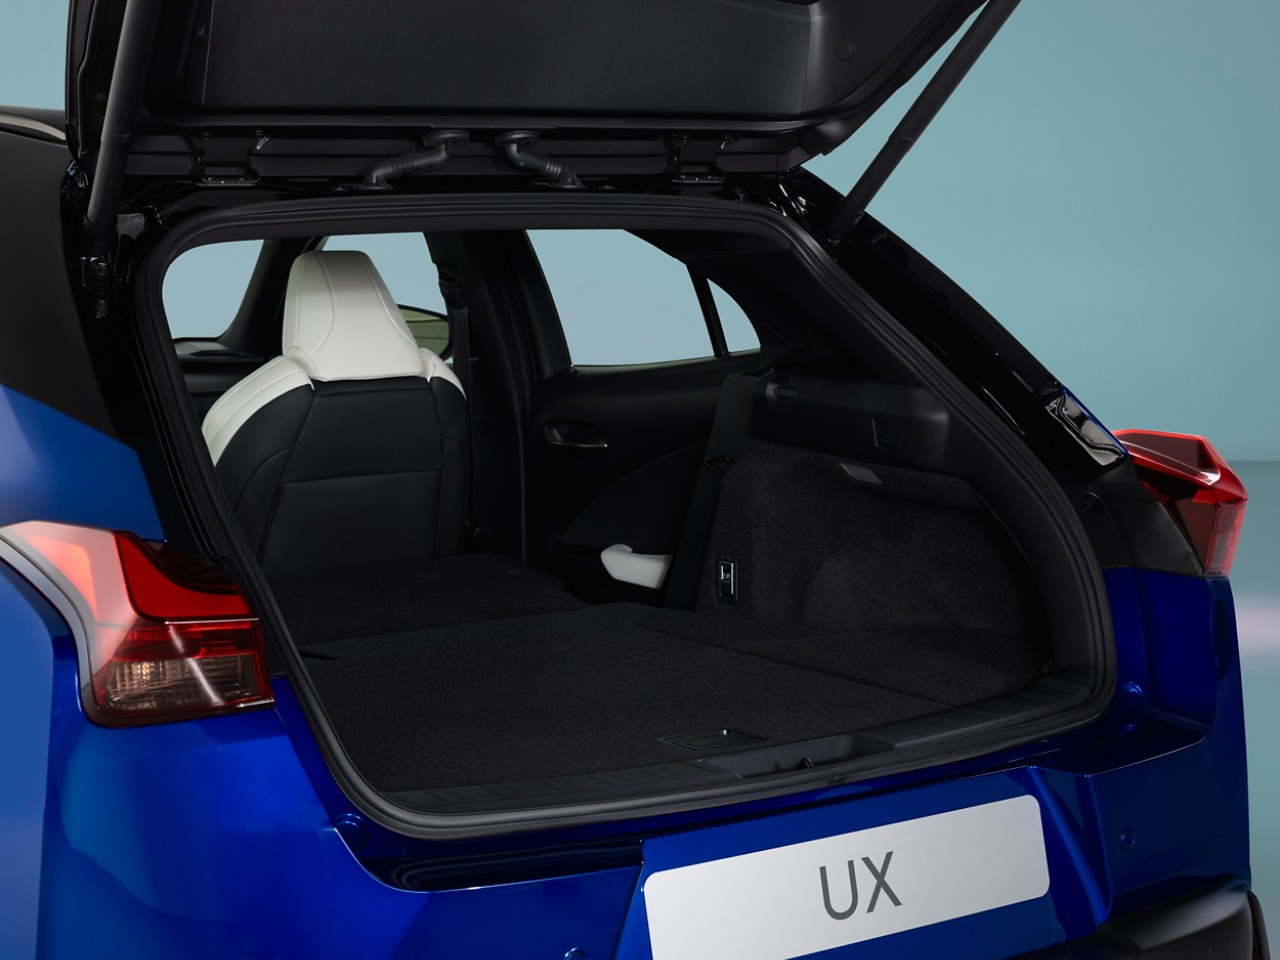 The Lexus UX boot